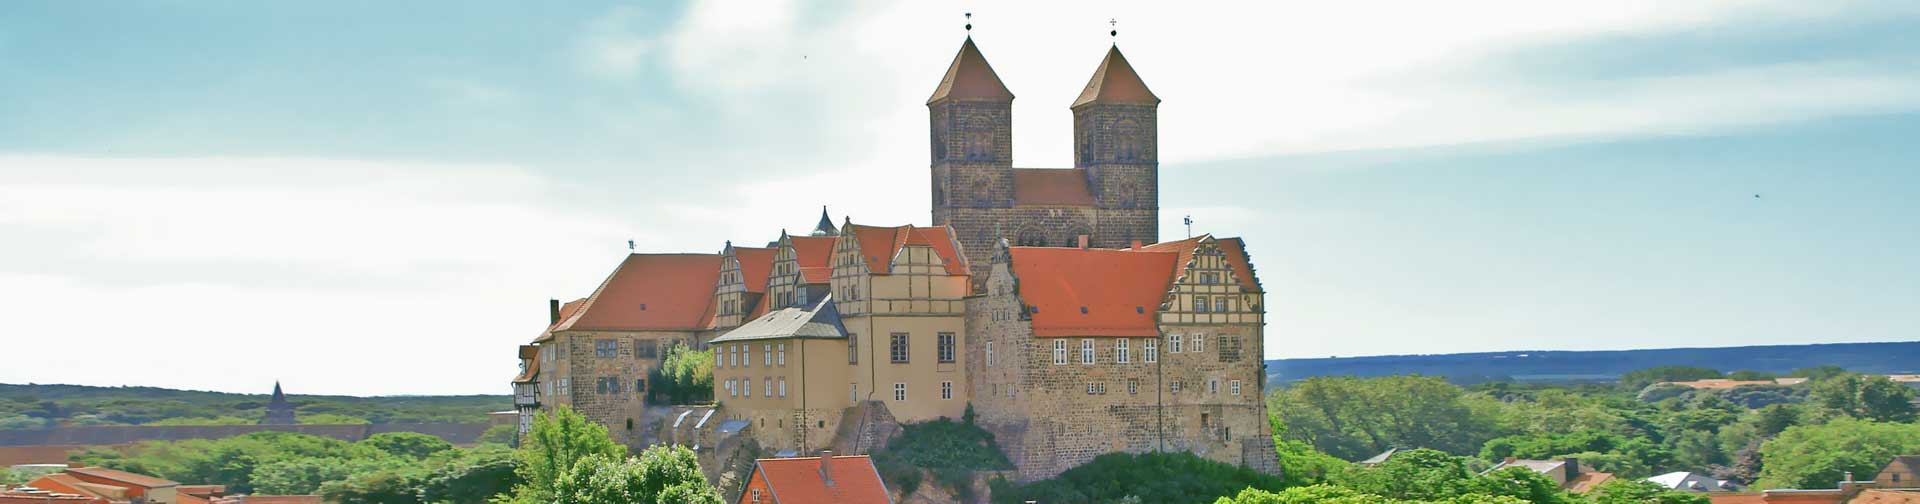 Quedlinburg. Schloss